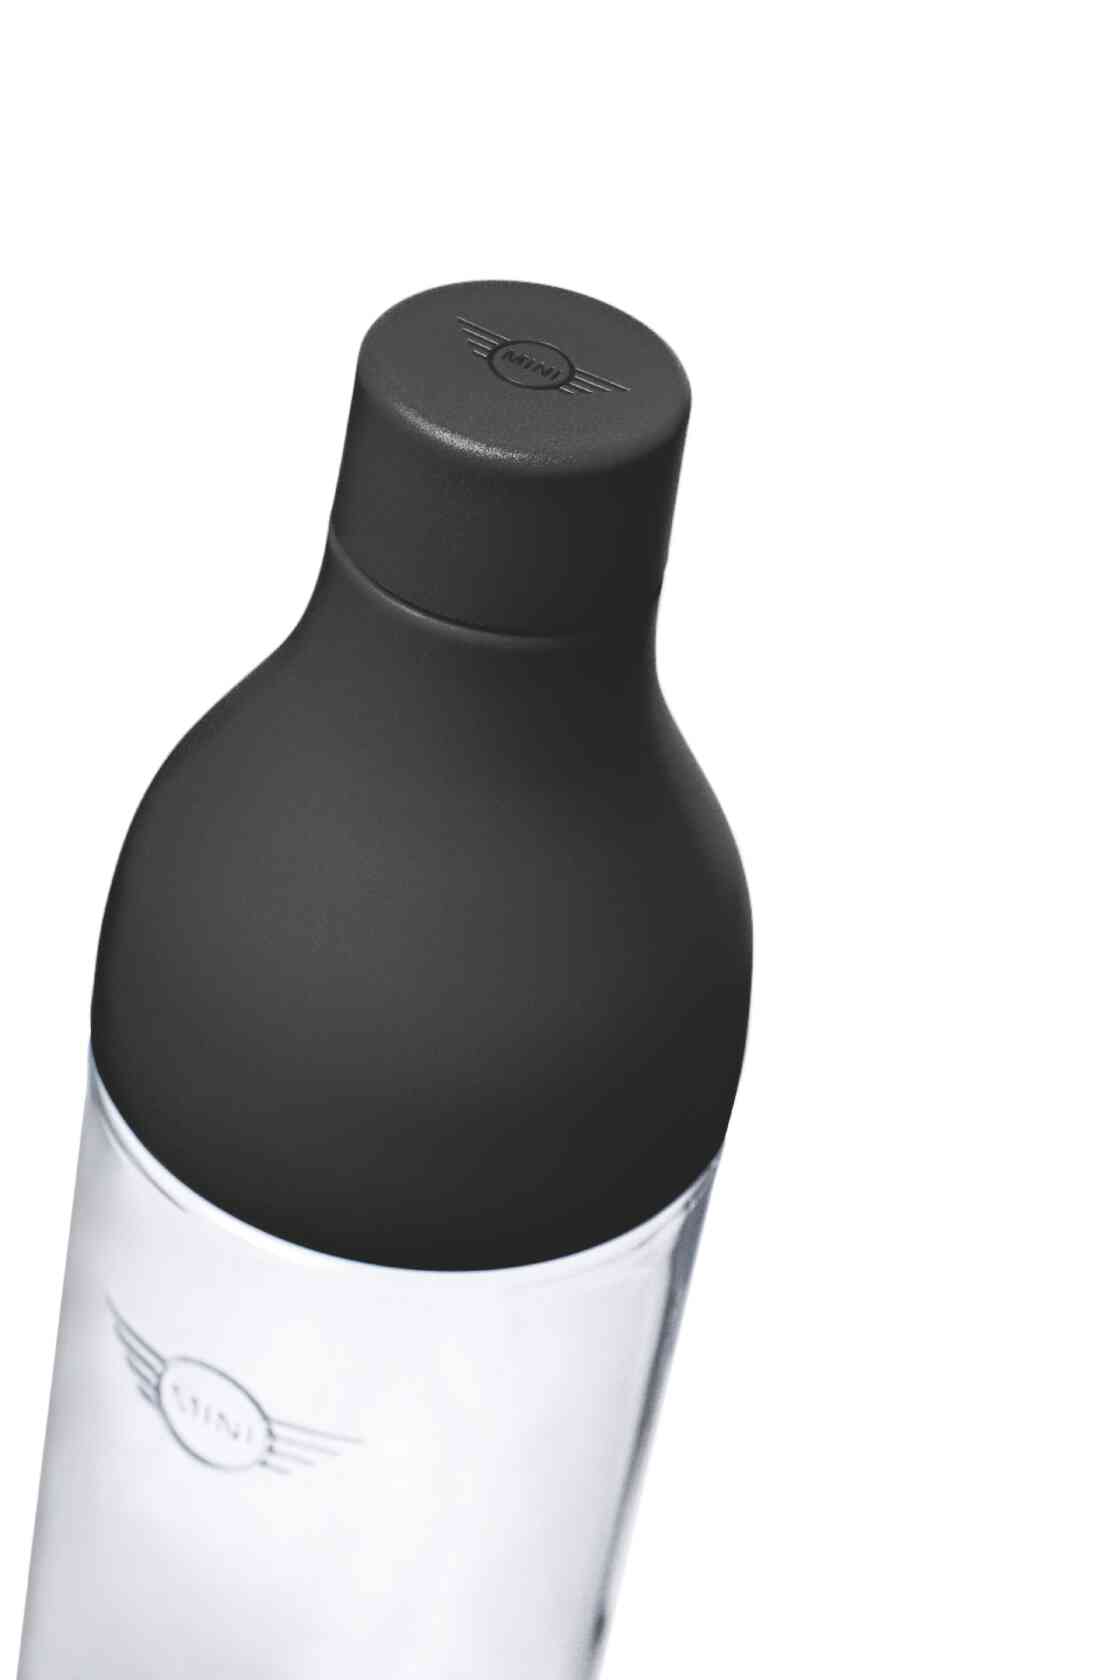 MINI Colour Block Water Bottle Schwarz